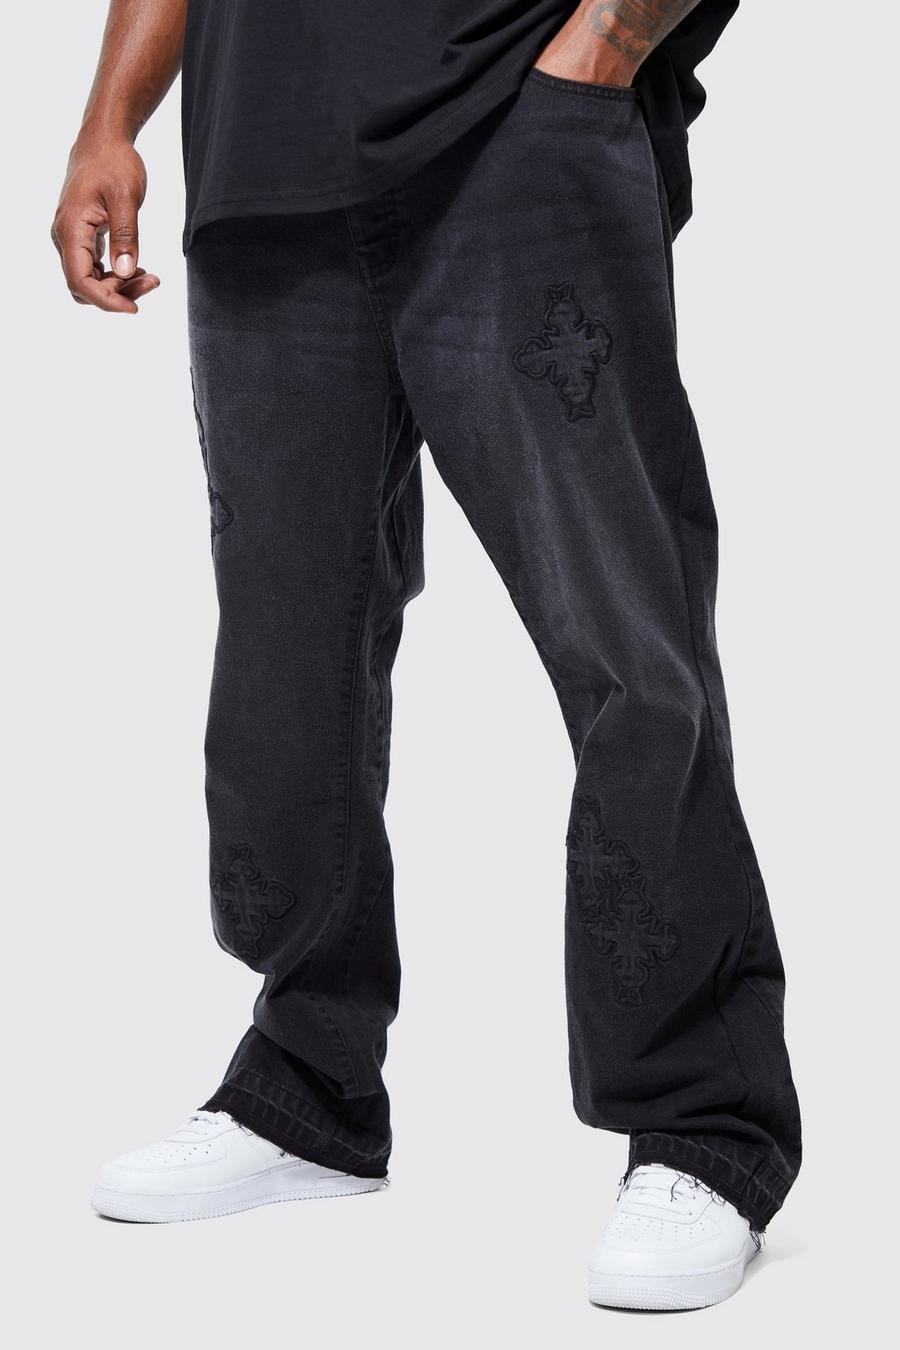 Jeans Plus Size Slim Fit in denim rigido con applique a croce, Washed black